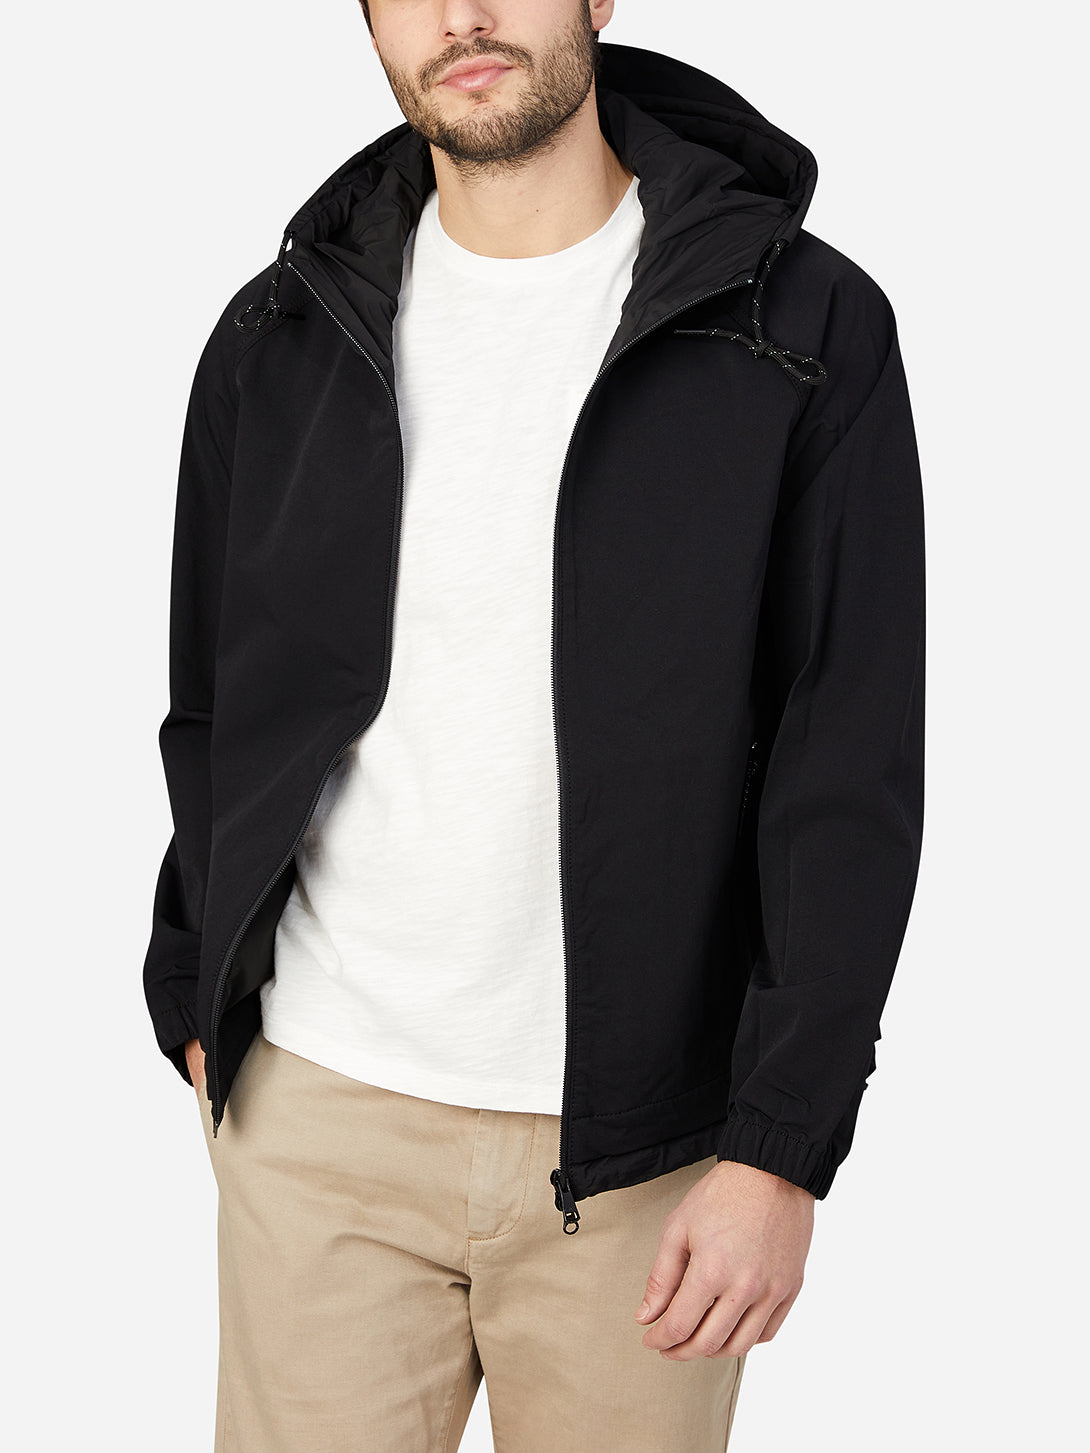 JET BLACK jackets for men envoy jacket ons clothing